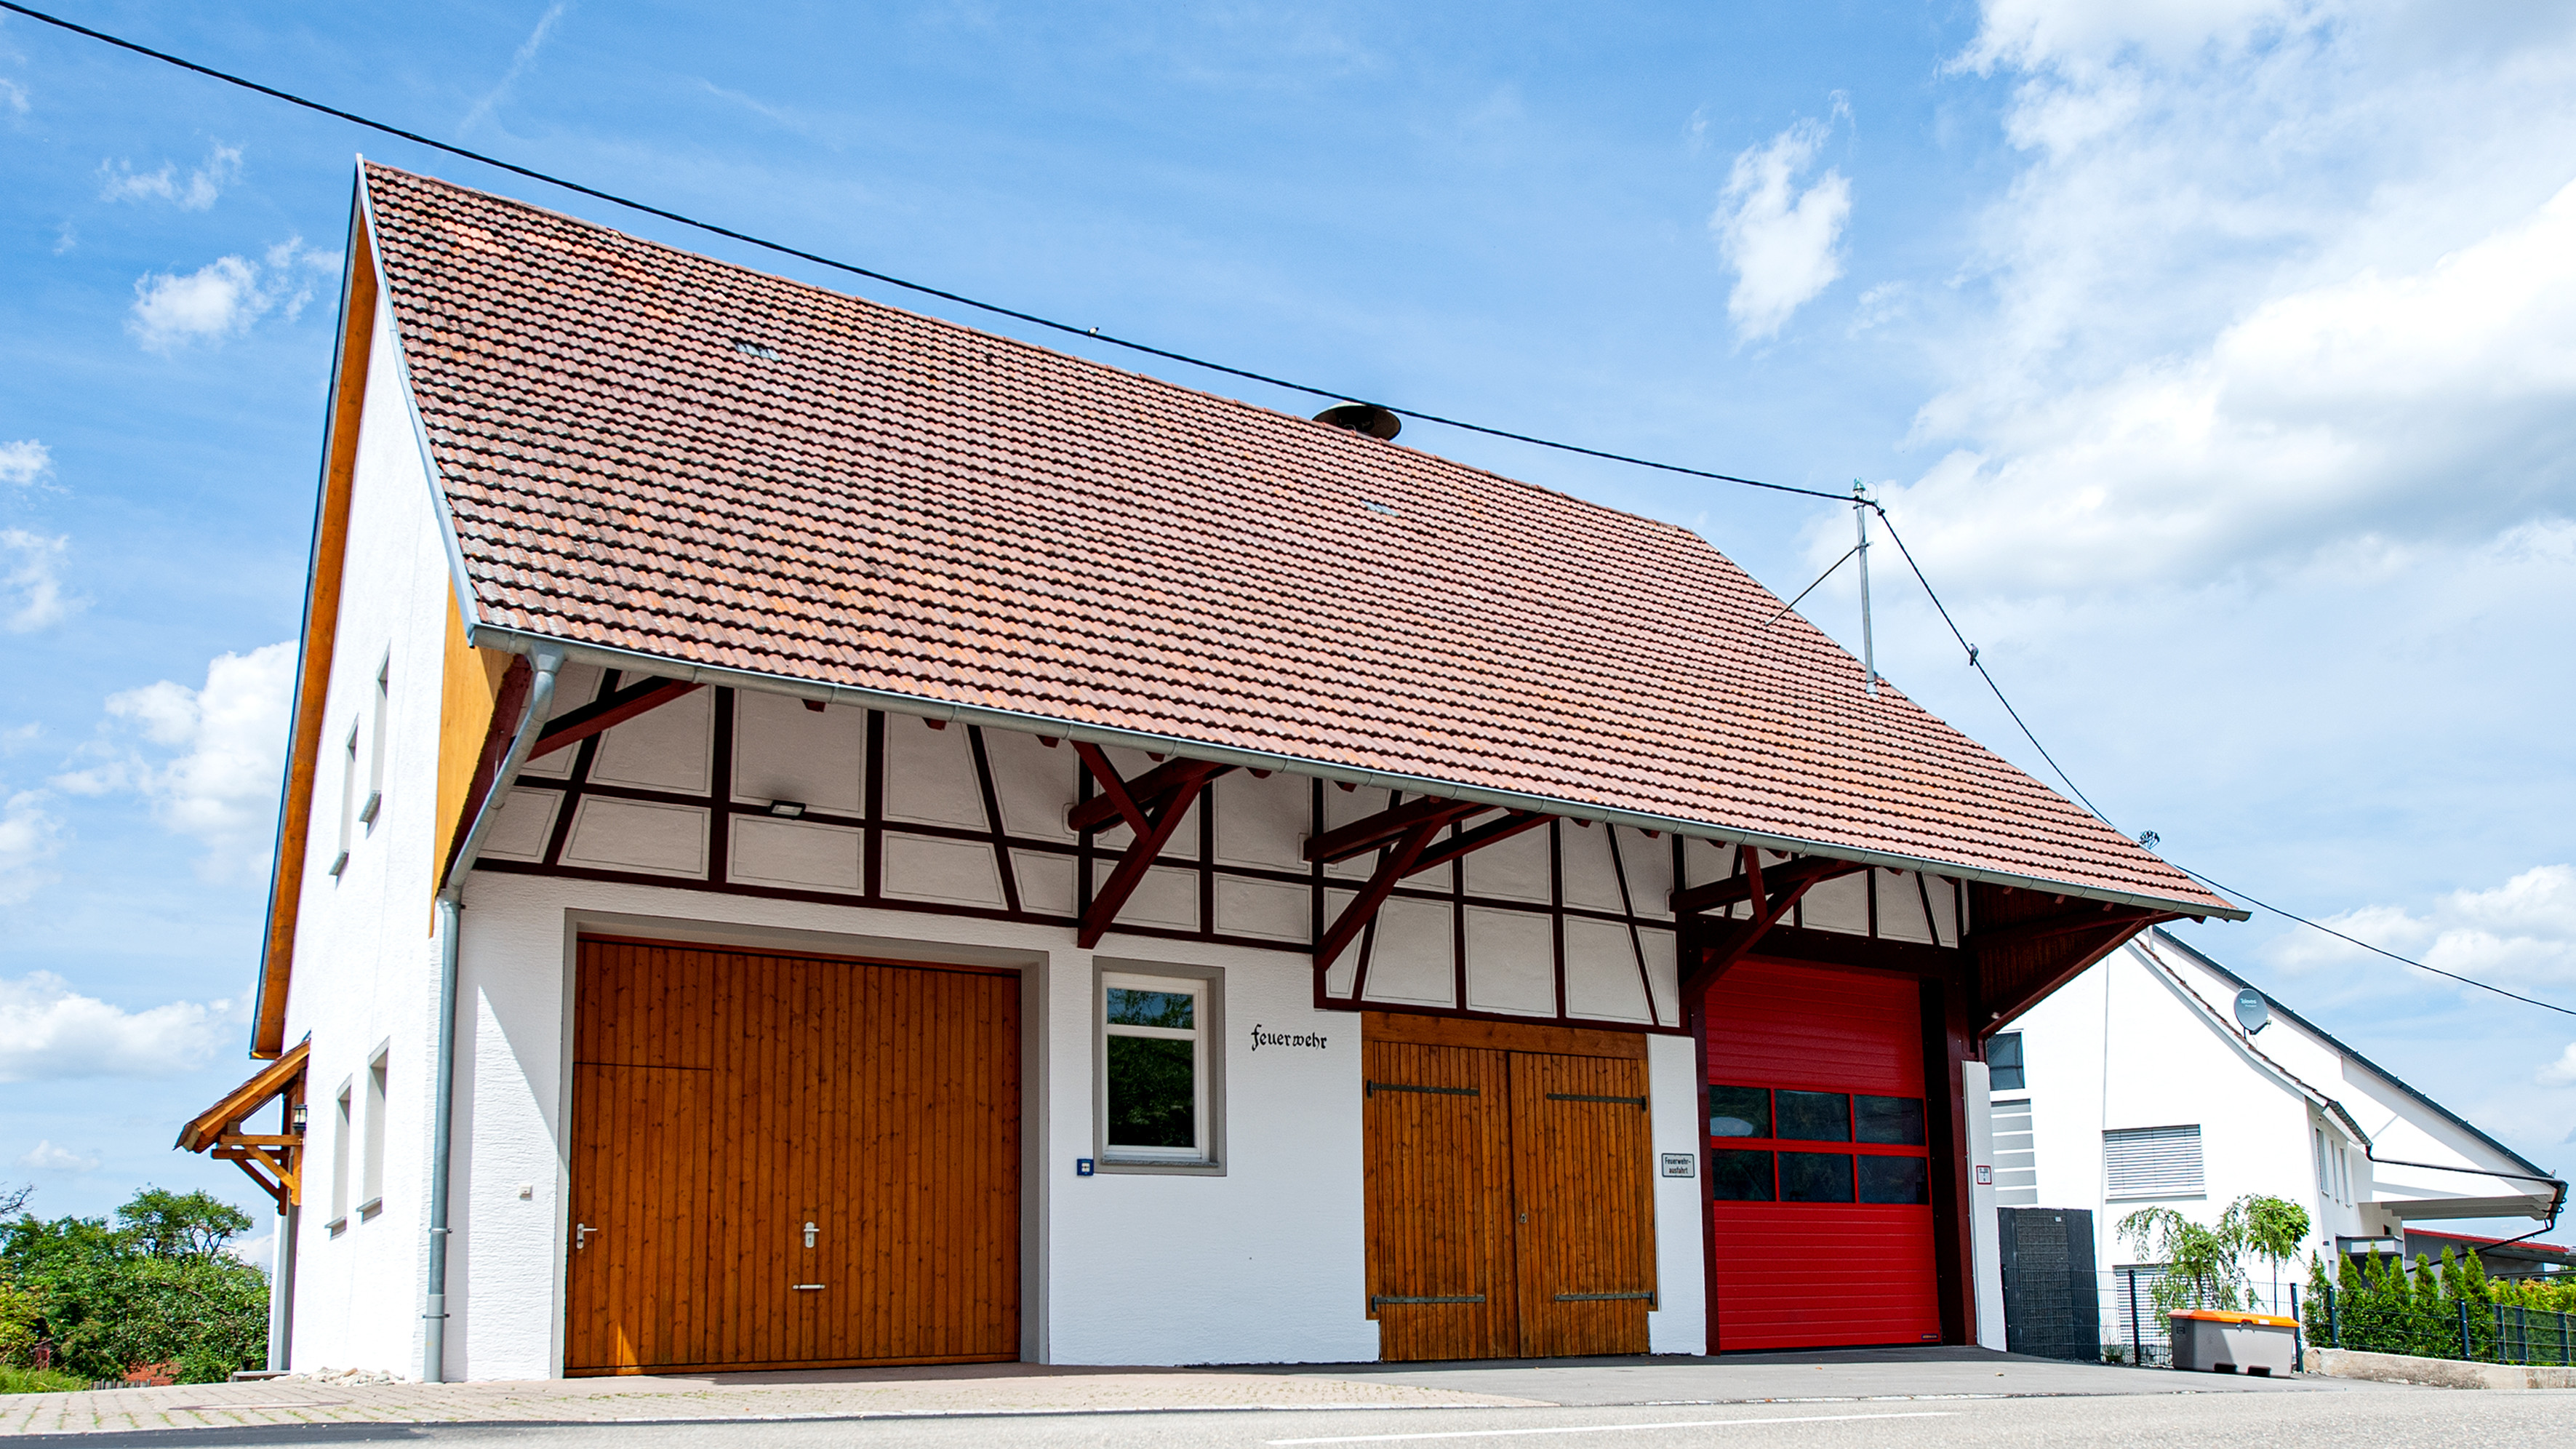 Feuerwehrhaus Ittenhausen